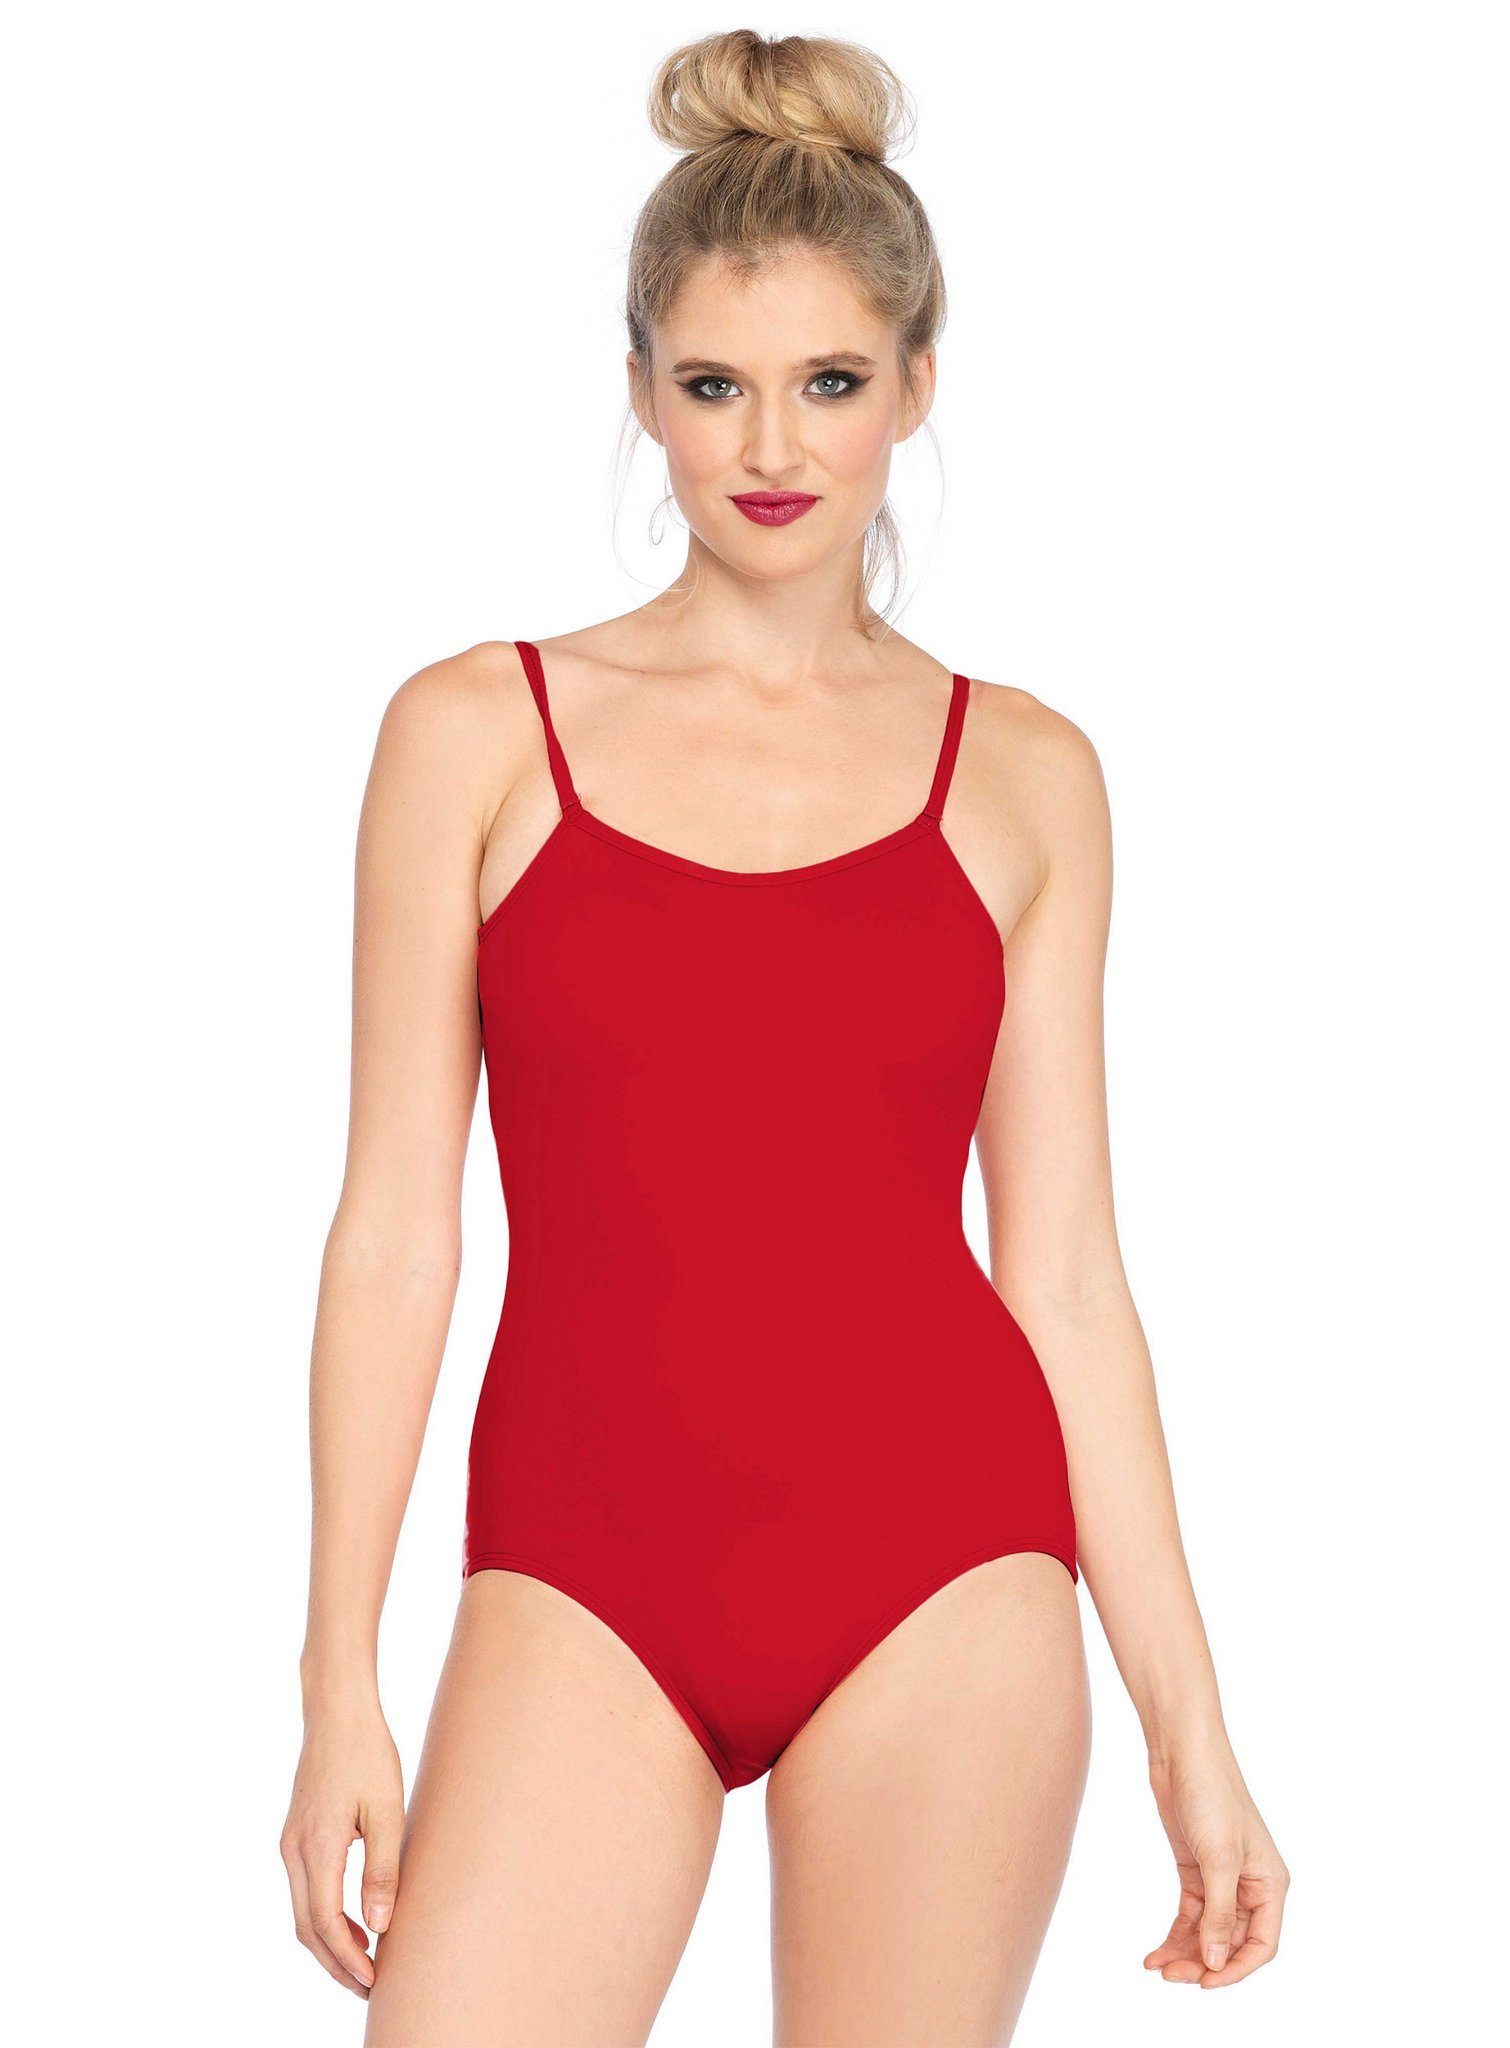 Leg Avenue Kostüm Träger-Bodysuit rot, 50